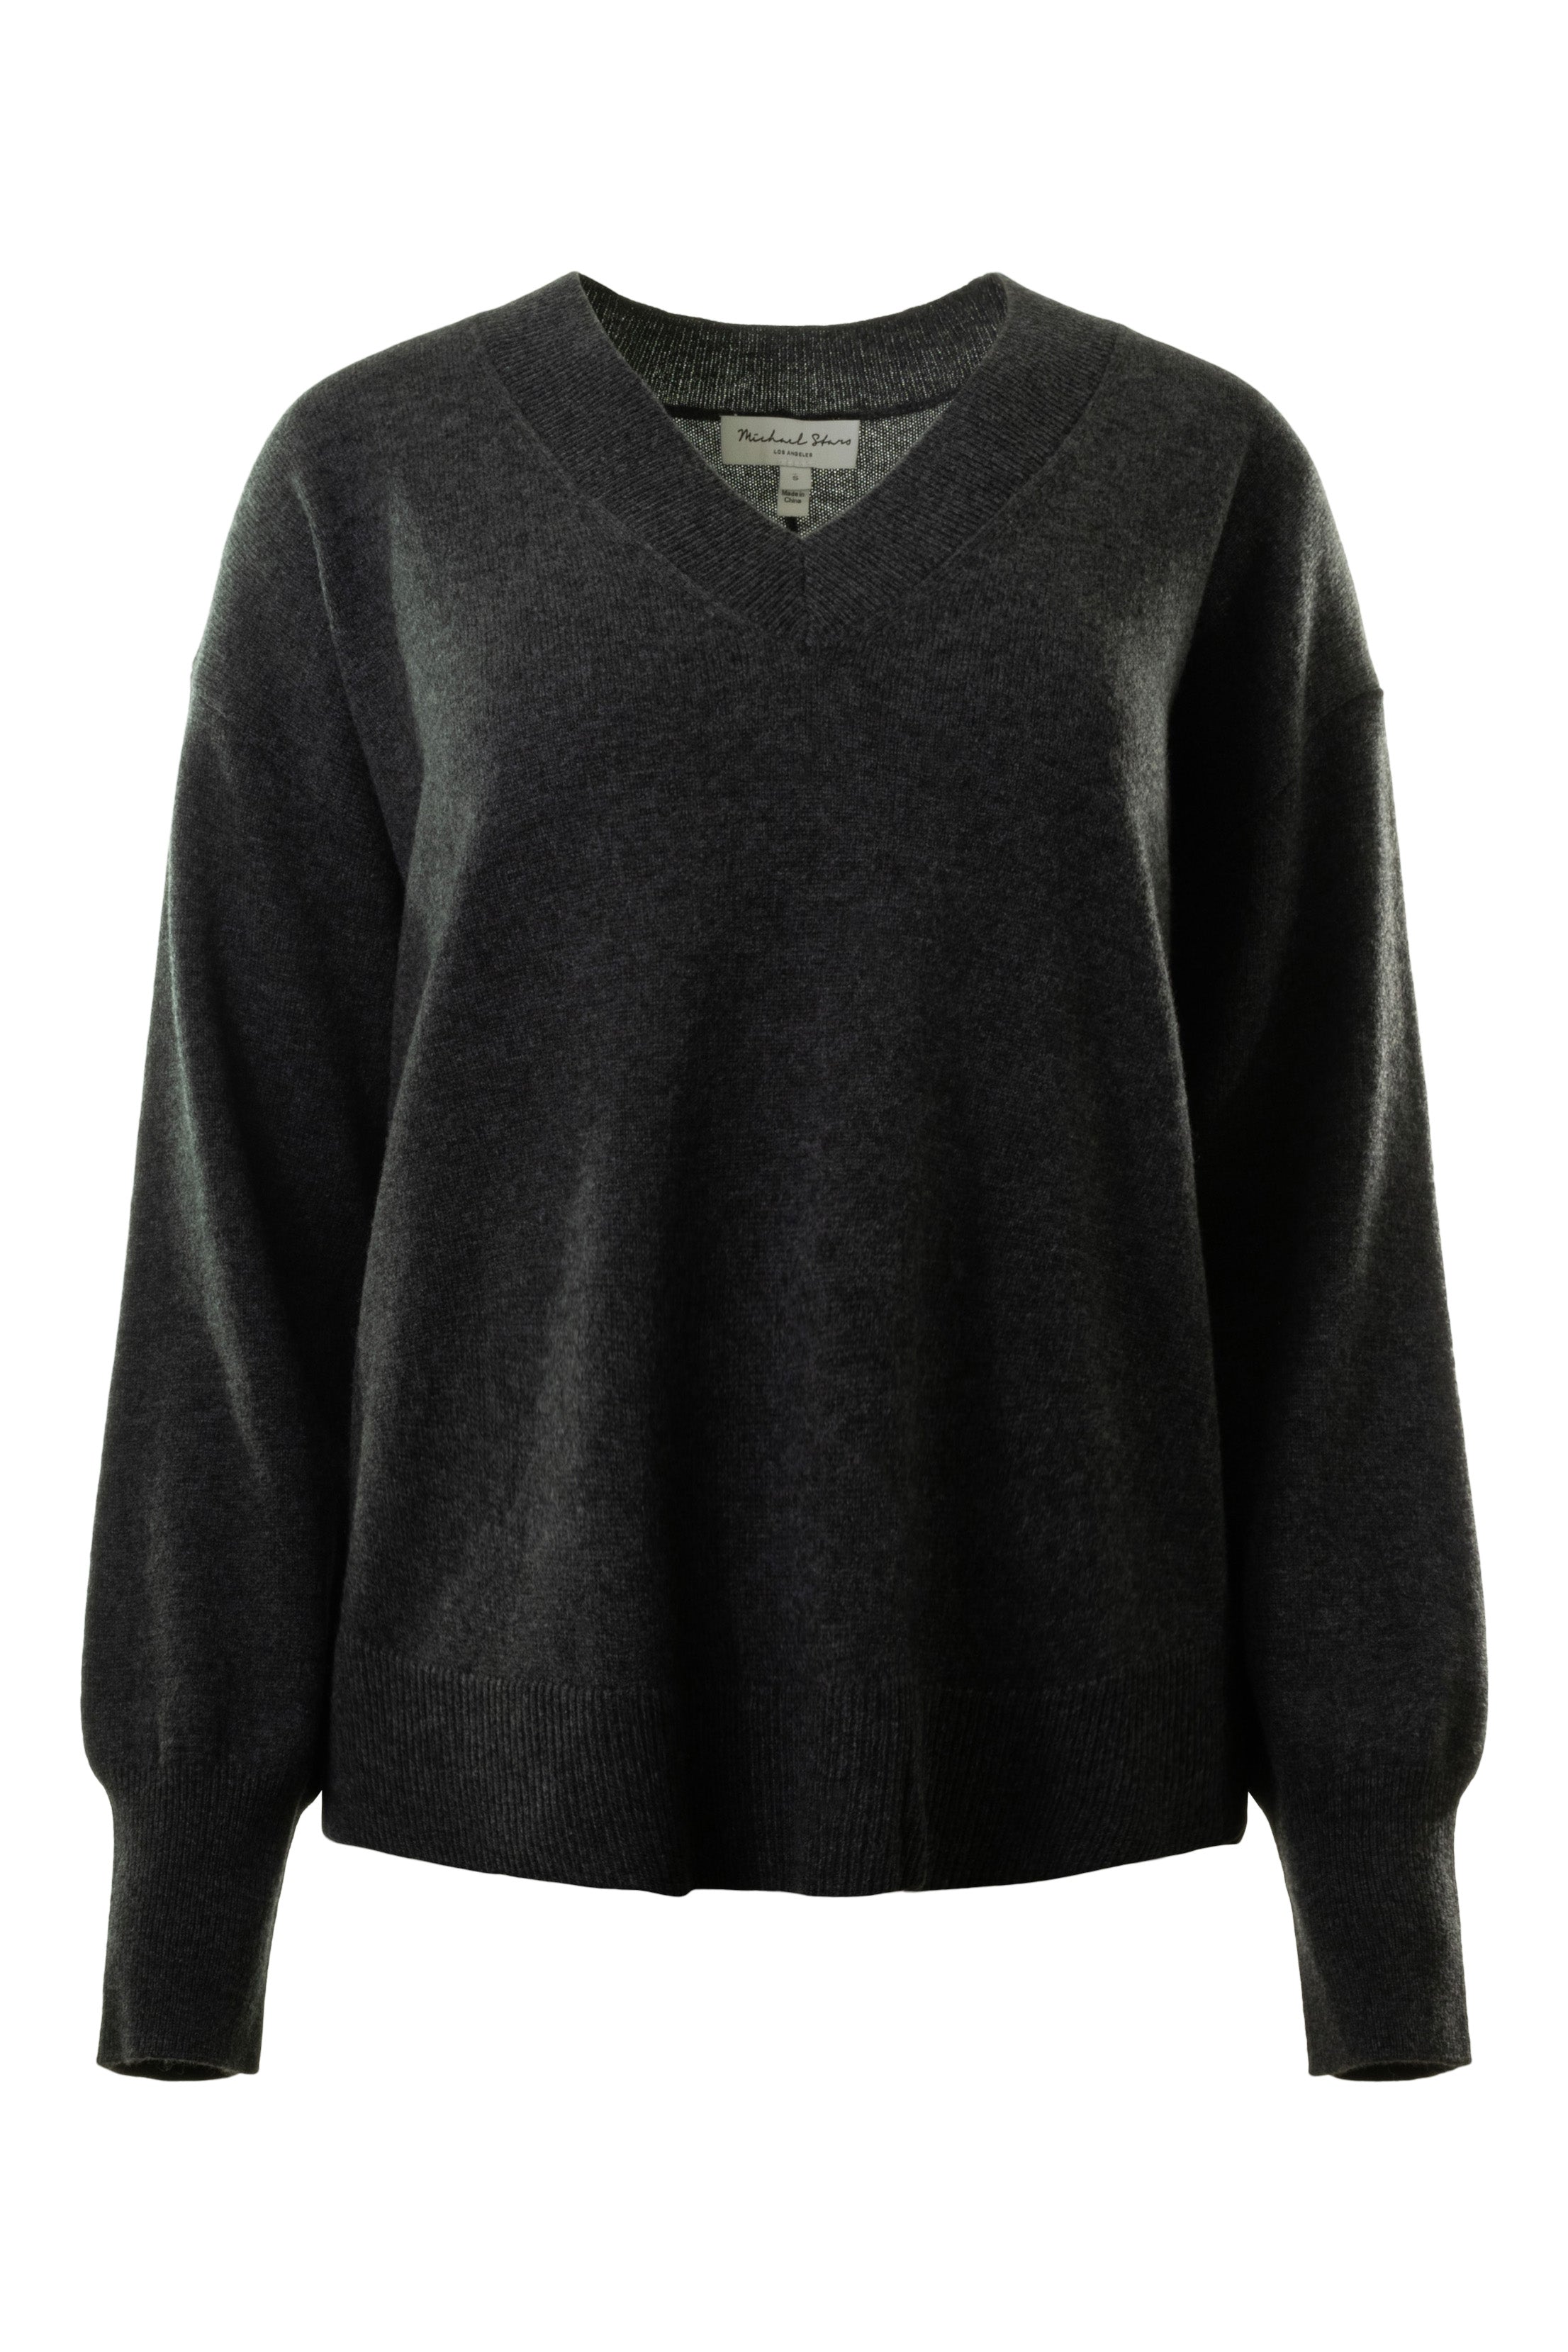 Michael Stars Odette V-Neck Sweater in Charcoal